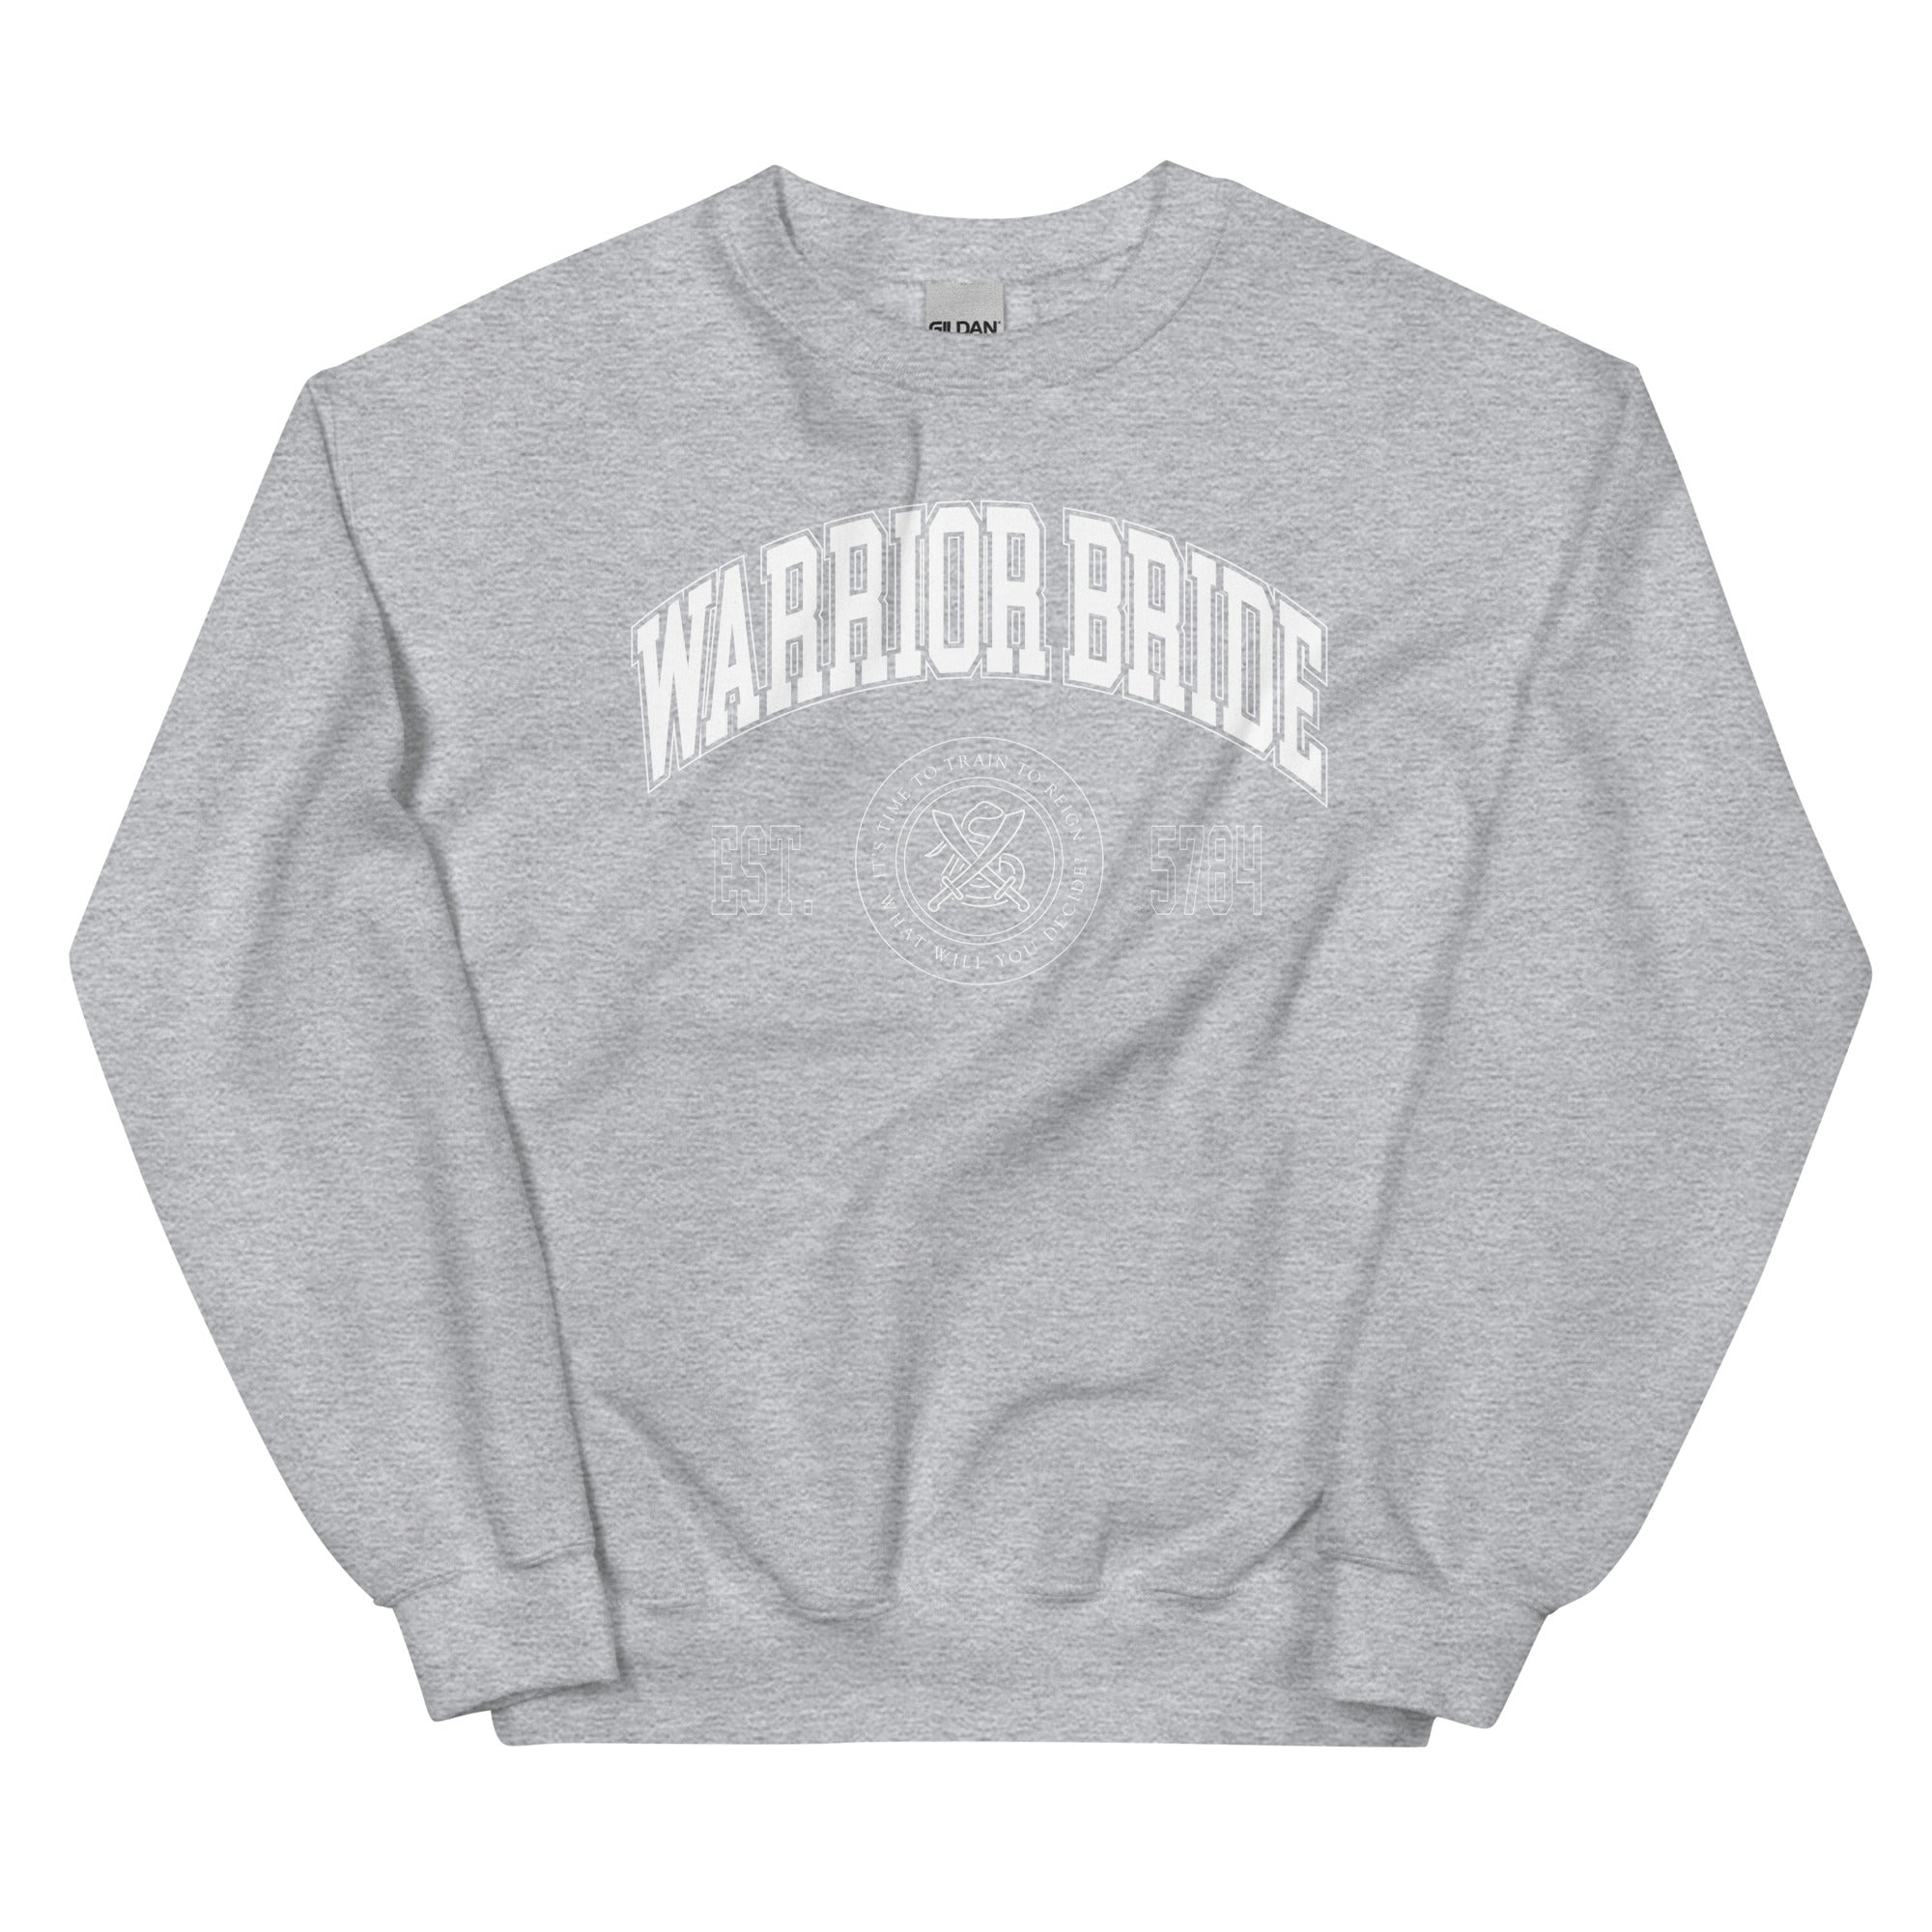 "Warrior Bride" College Crewneck Sweater